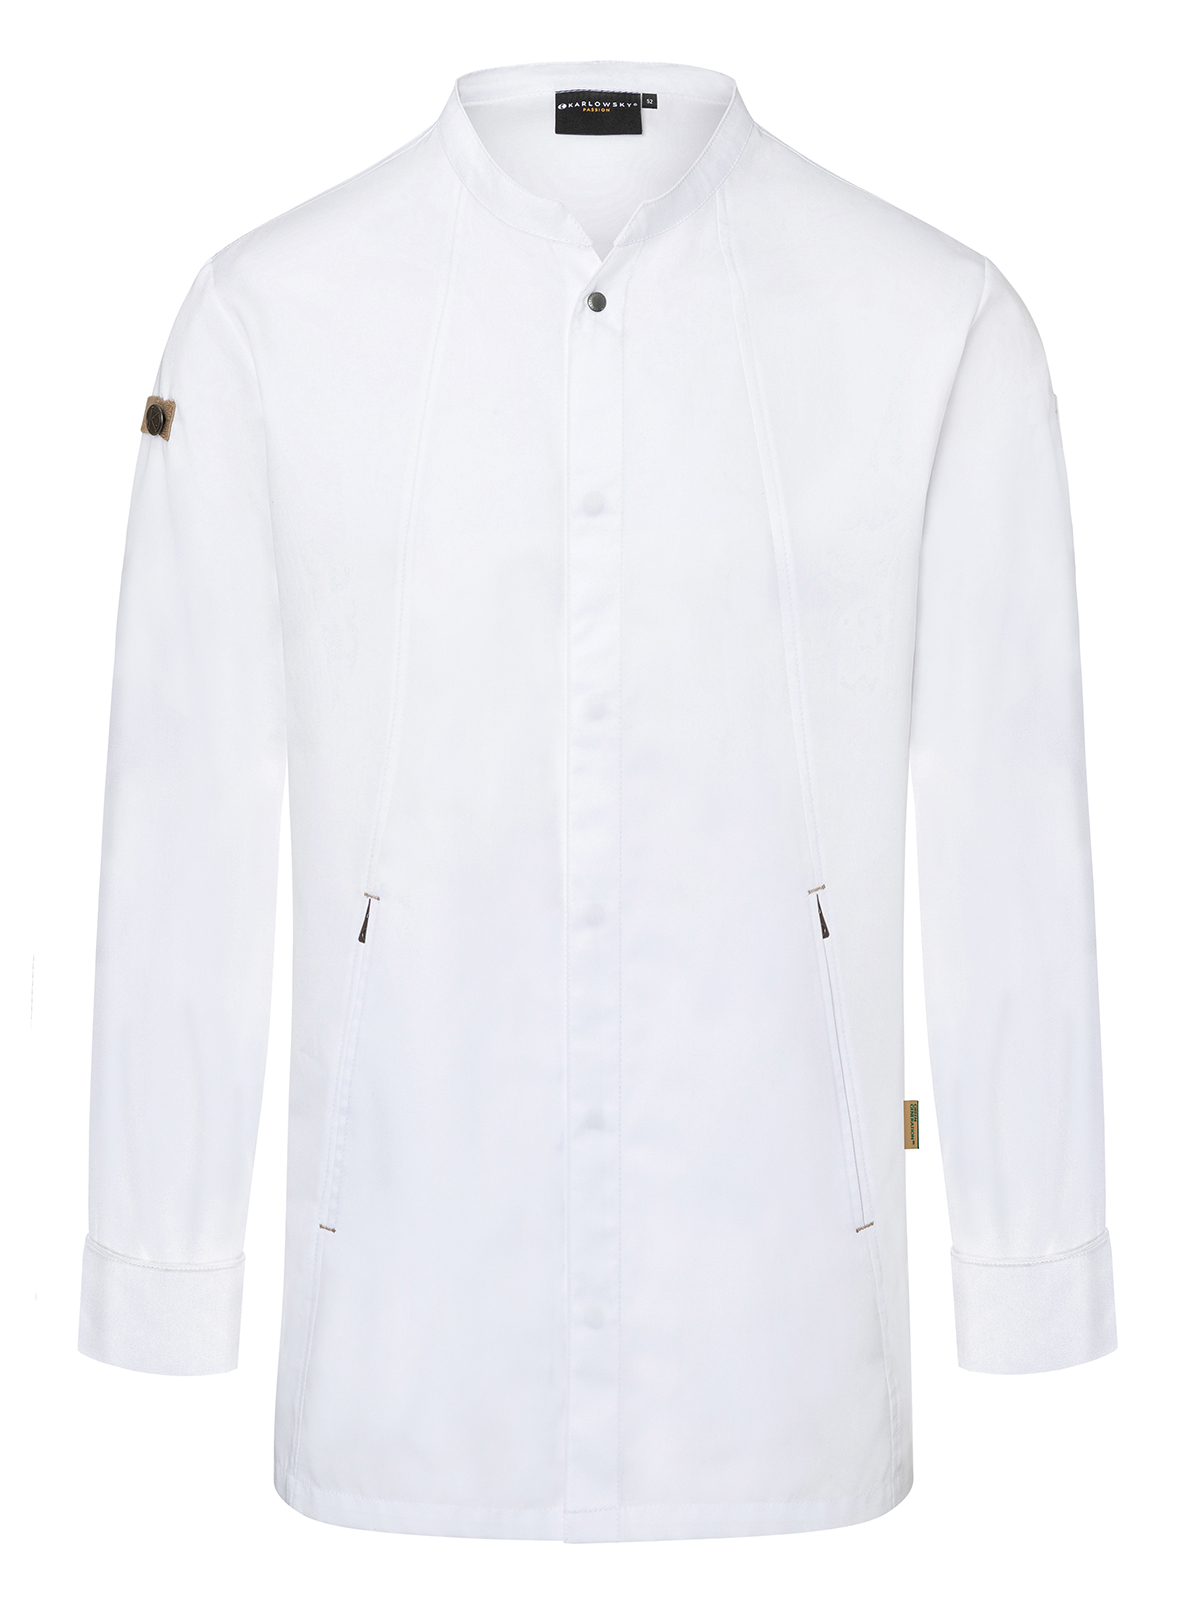 chefs-jacket-long-sleeve-green-generation-white.webp